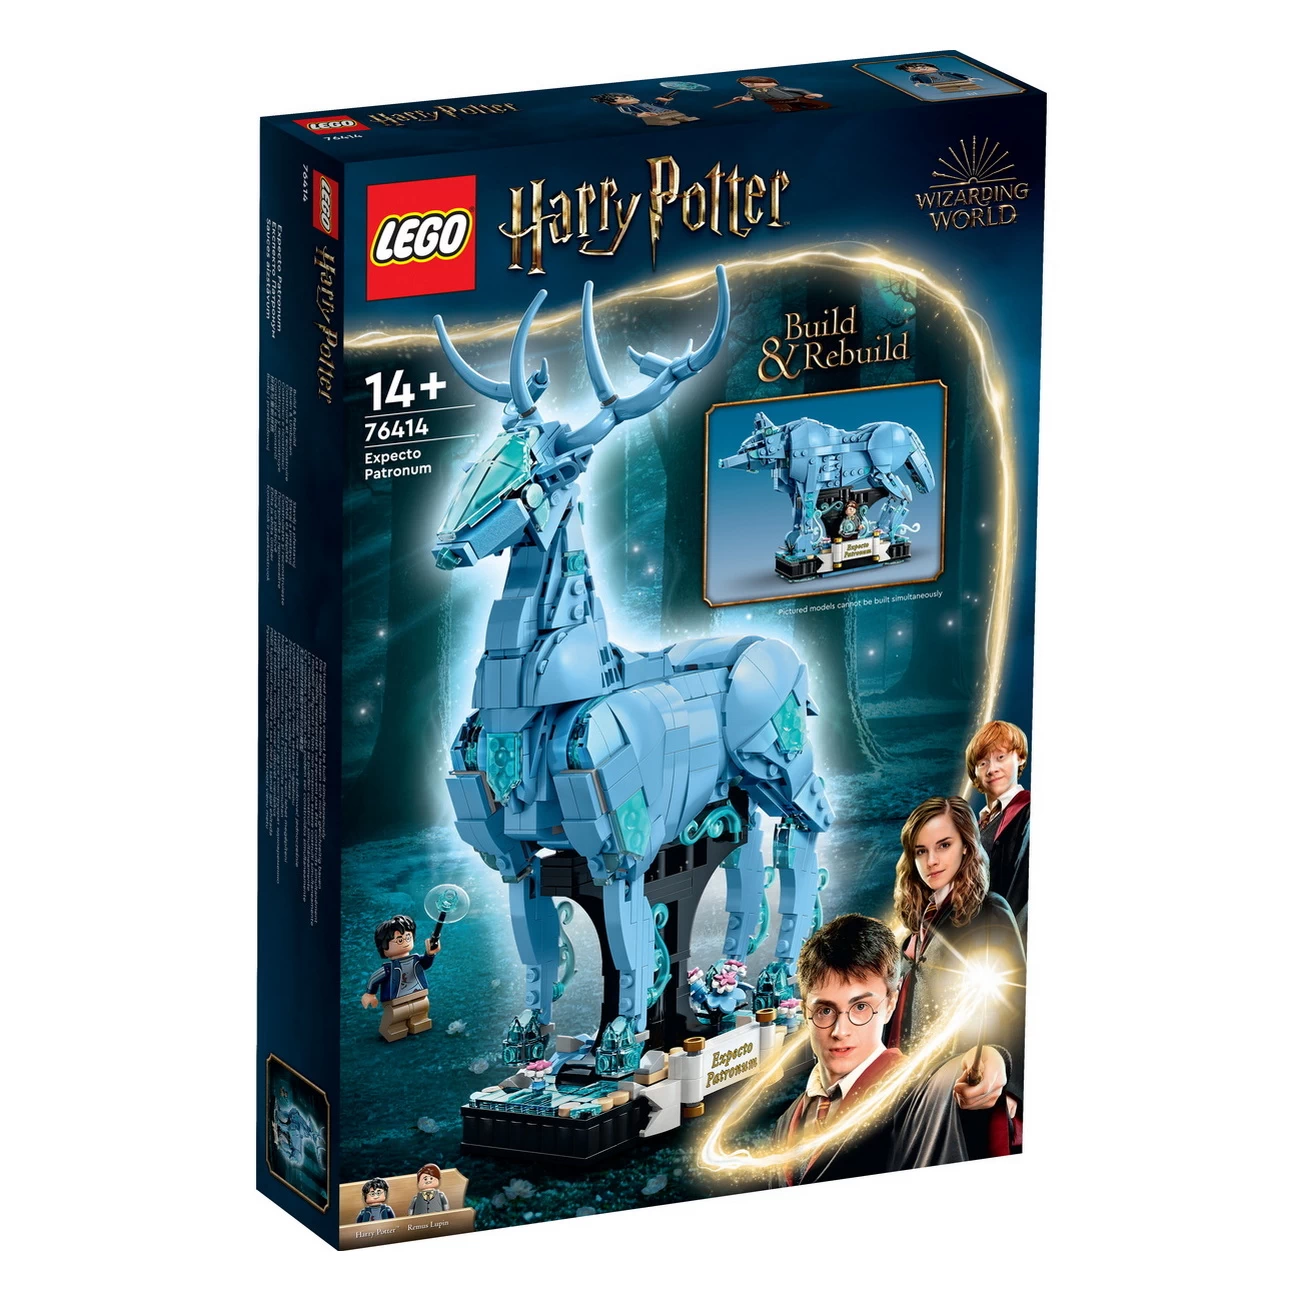 LEGO Harry Potter 76414 - Expecto Patronum